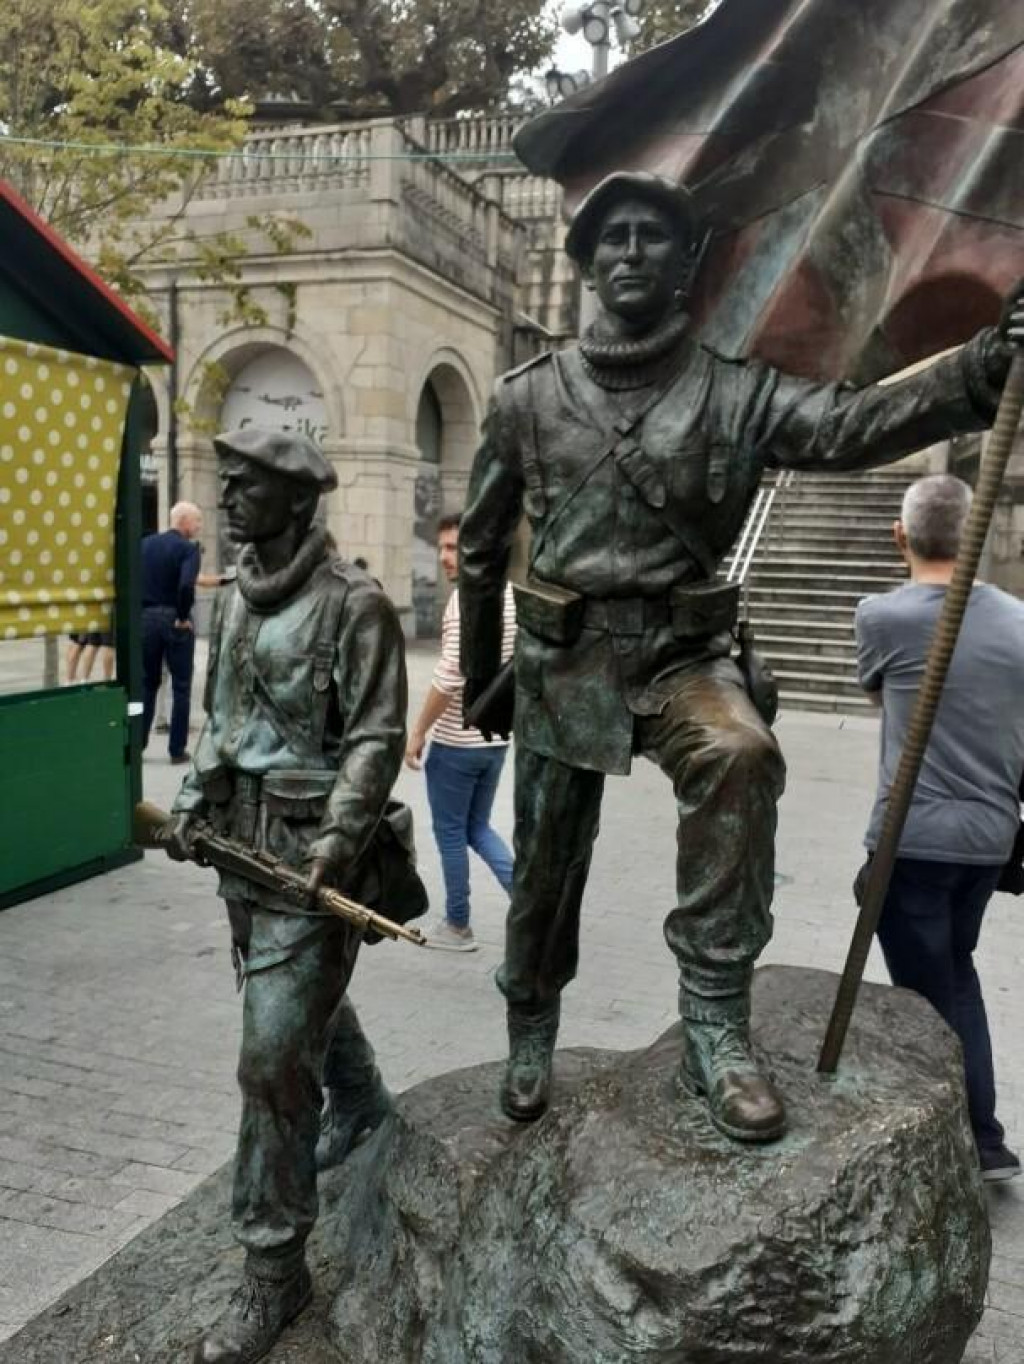 &lt;p&gt;Spomenik baskijskim antifašističkim borcima u Španjolskom građanskom ratu&lt;/p&gt;
